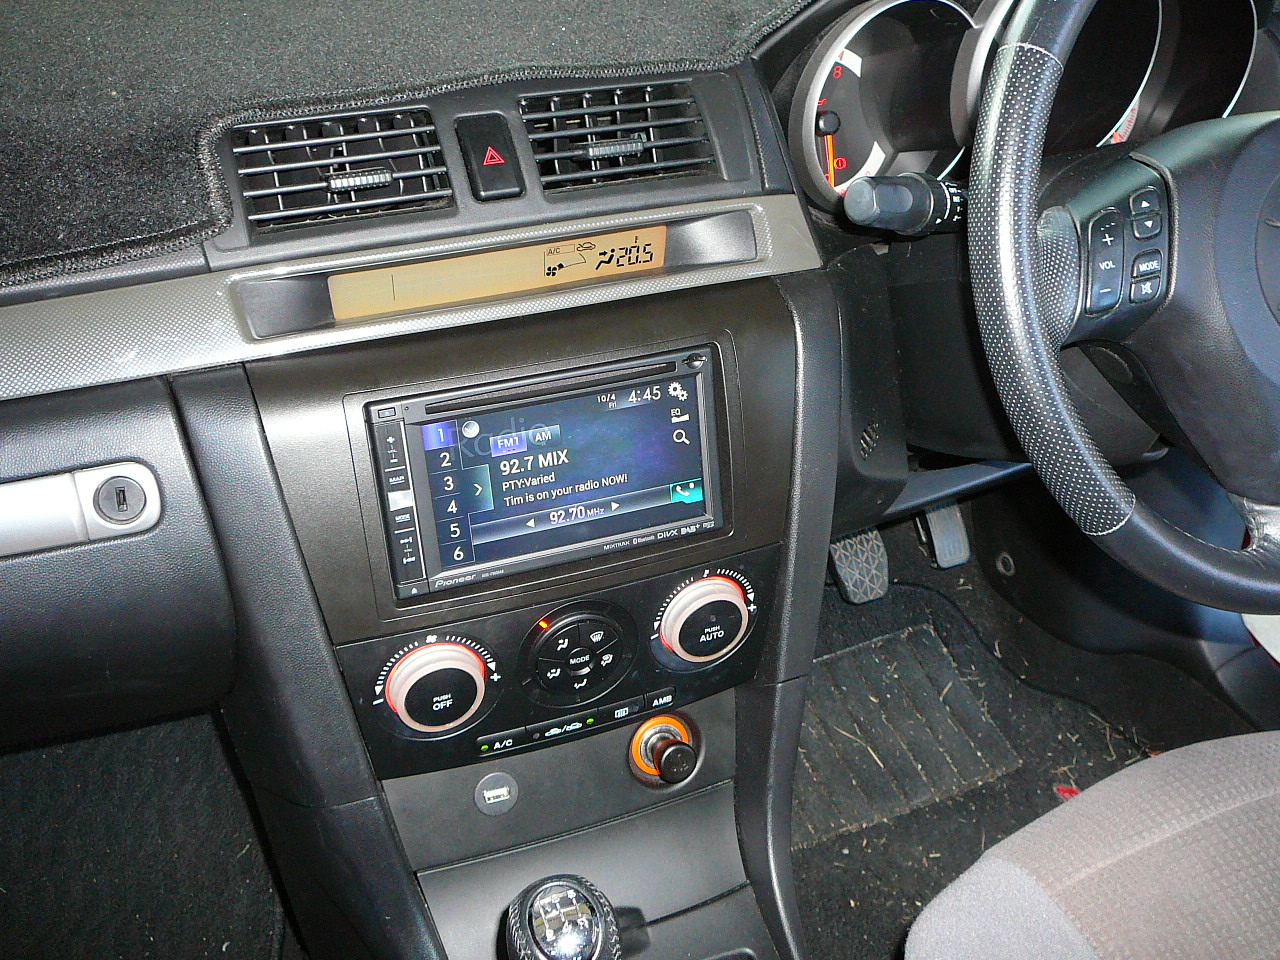 Mazda 3, Pioneer AVIC-F960 GPS Navigation System